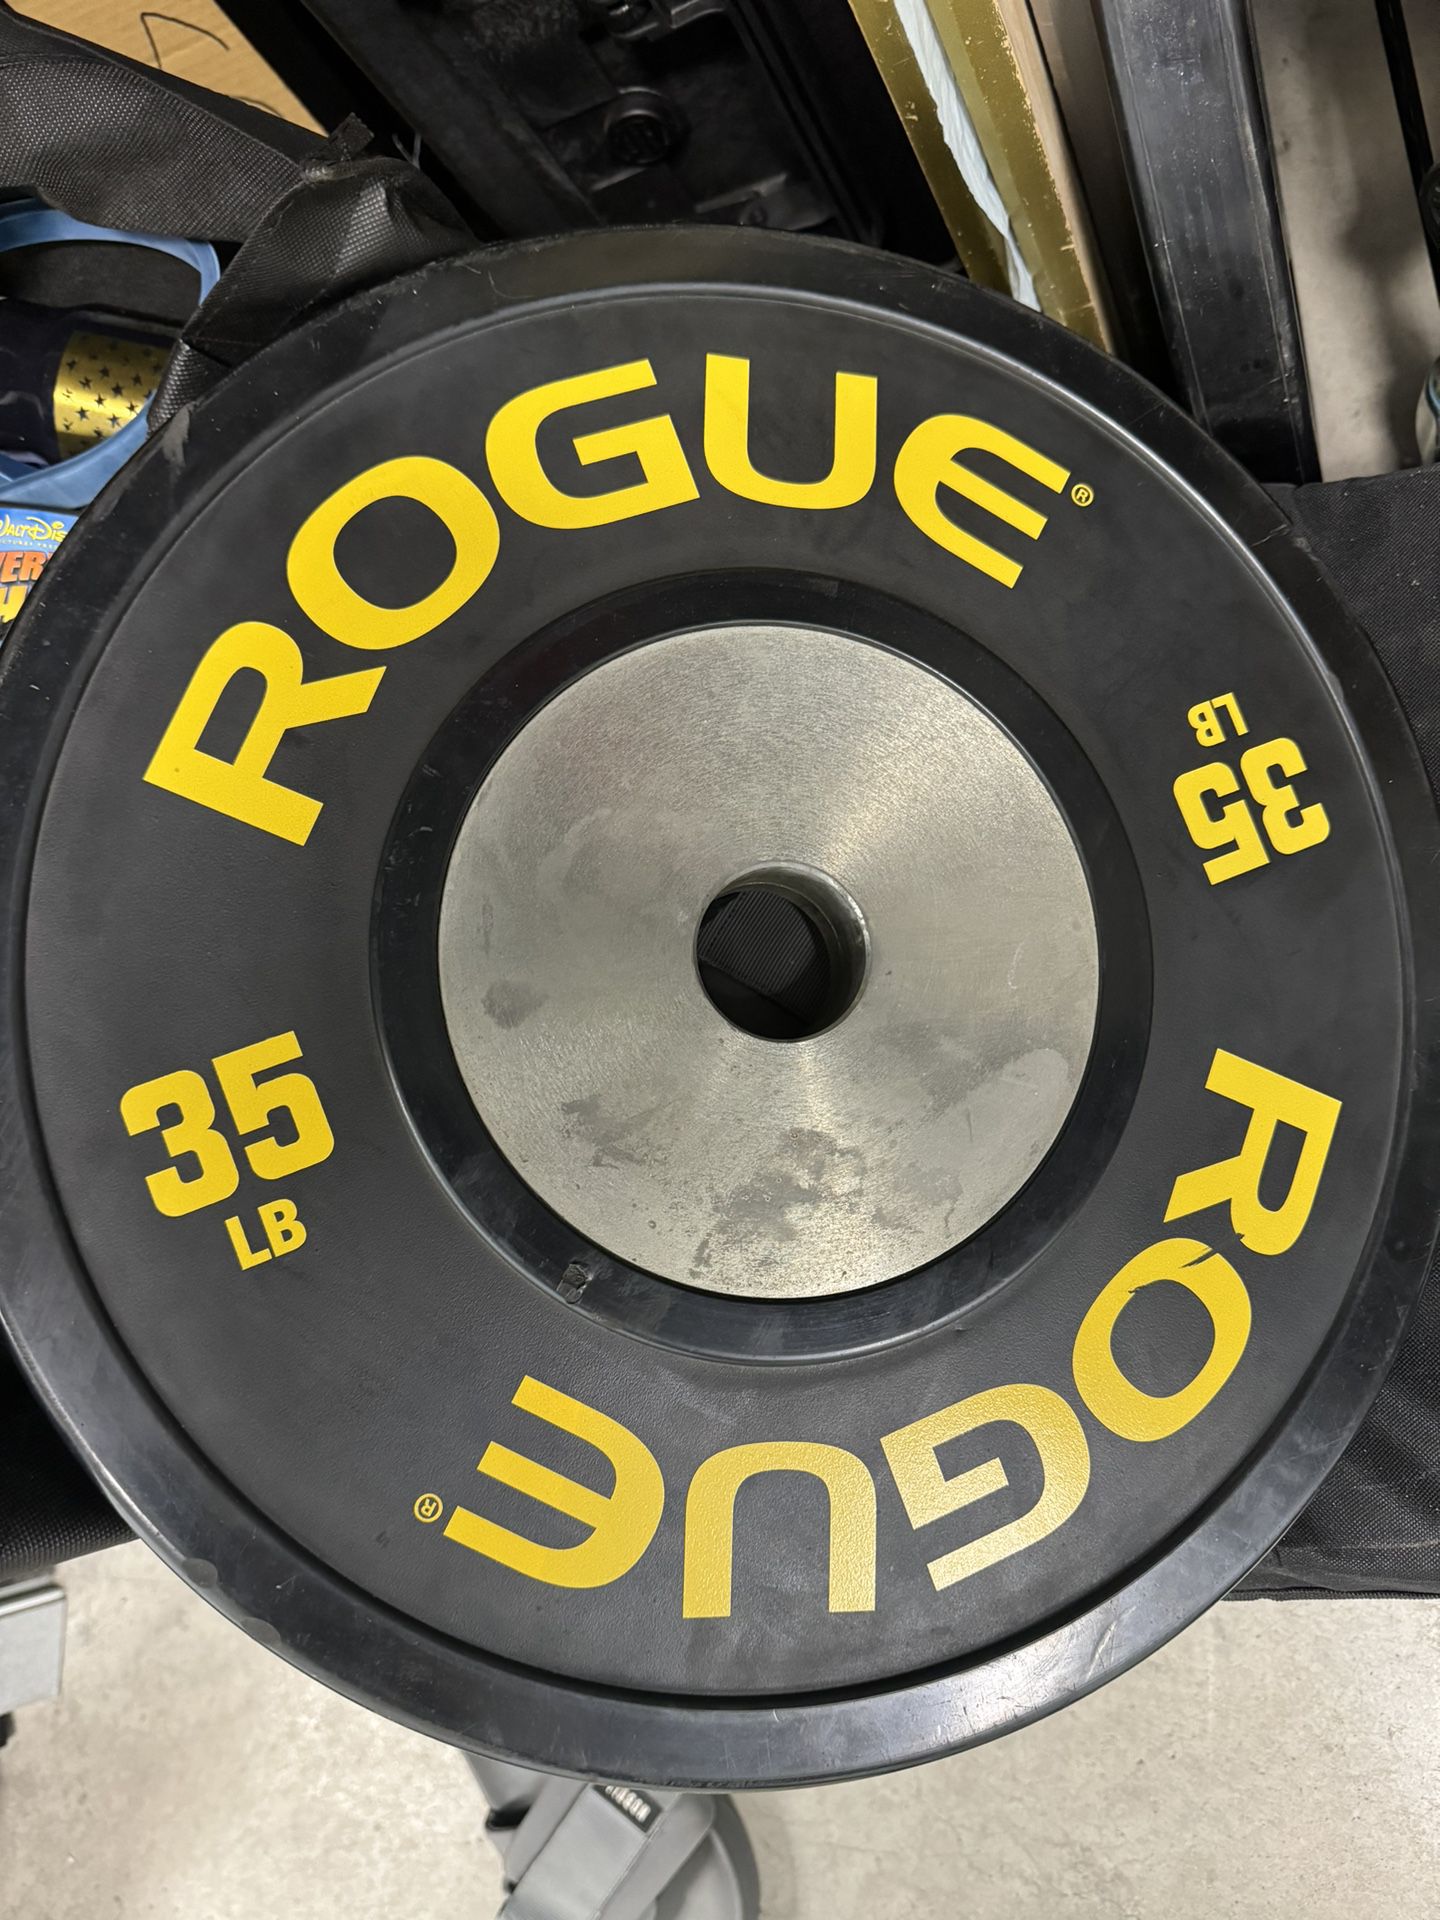 Rogue 35 Pound Plates  (2 Total) 